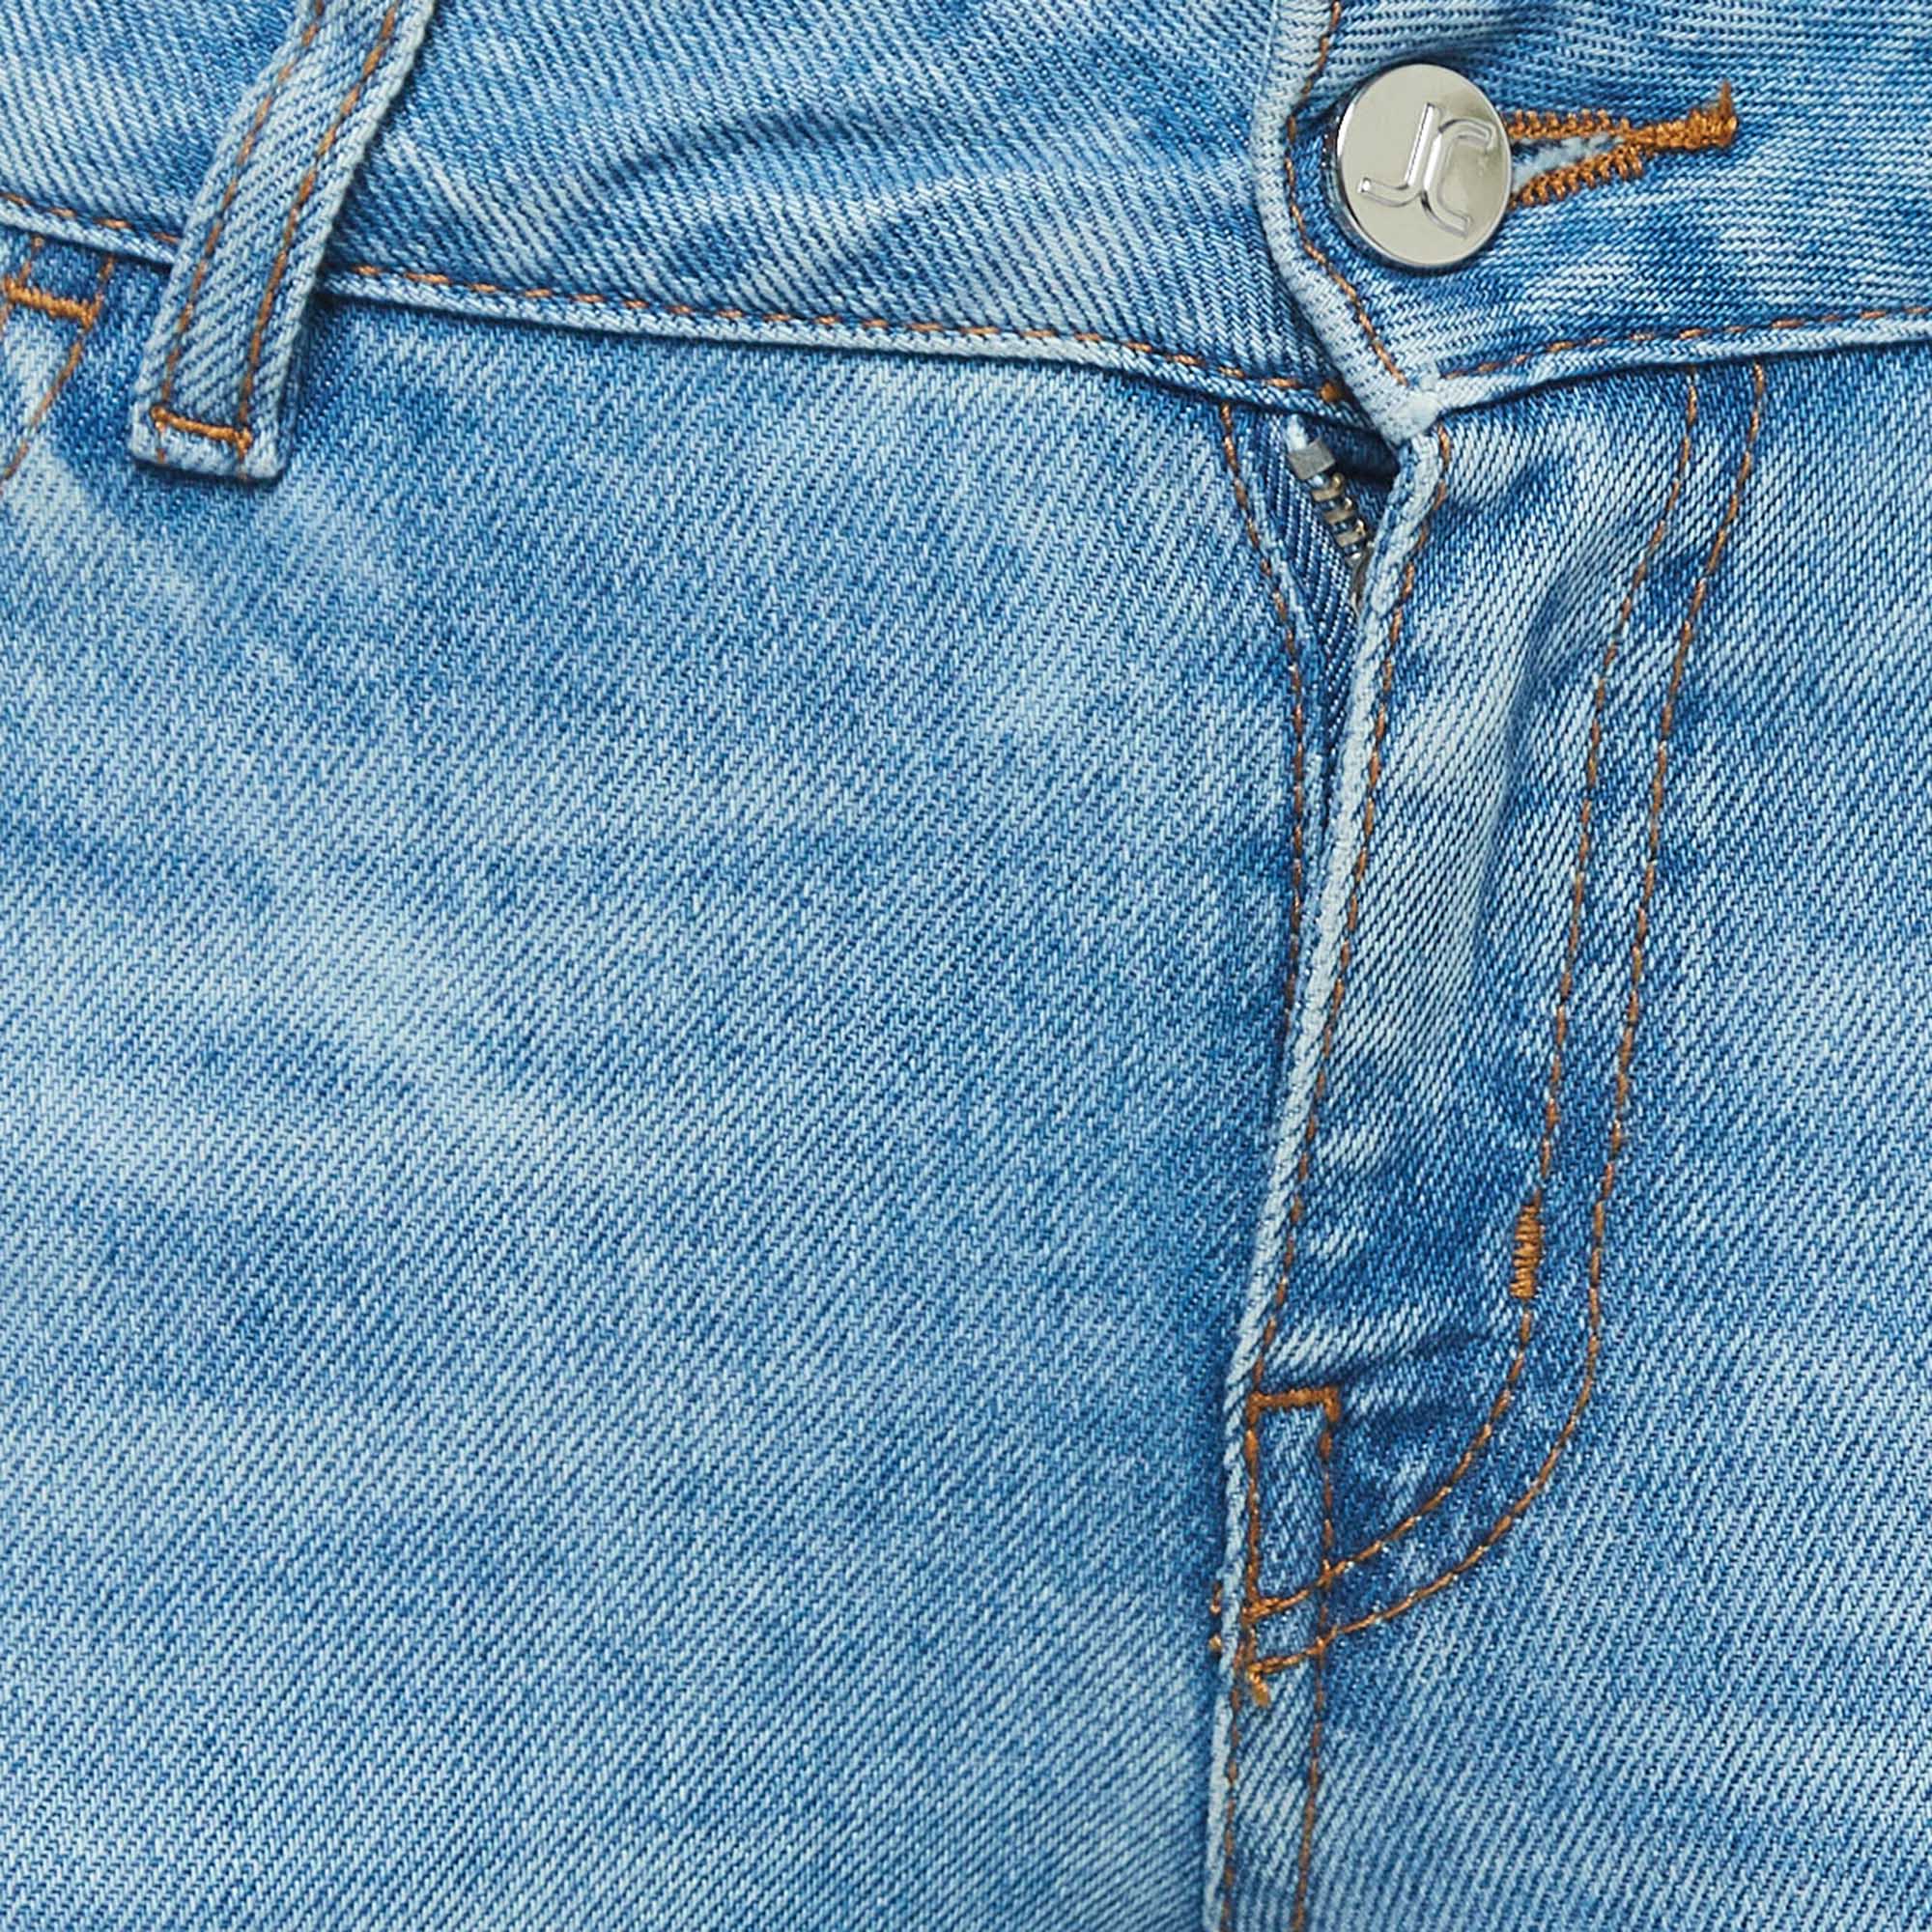 Just Cavalli Blue Denim Embroidered Pocket Slim Fit Jeans S Waist 26